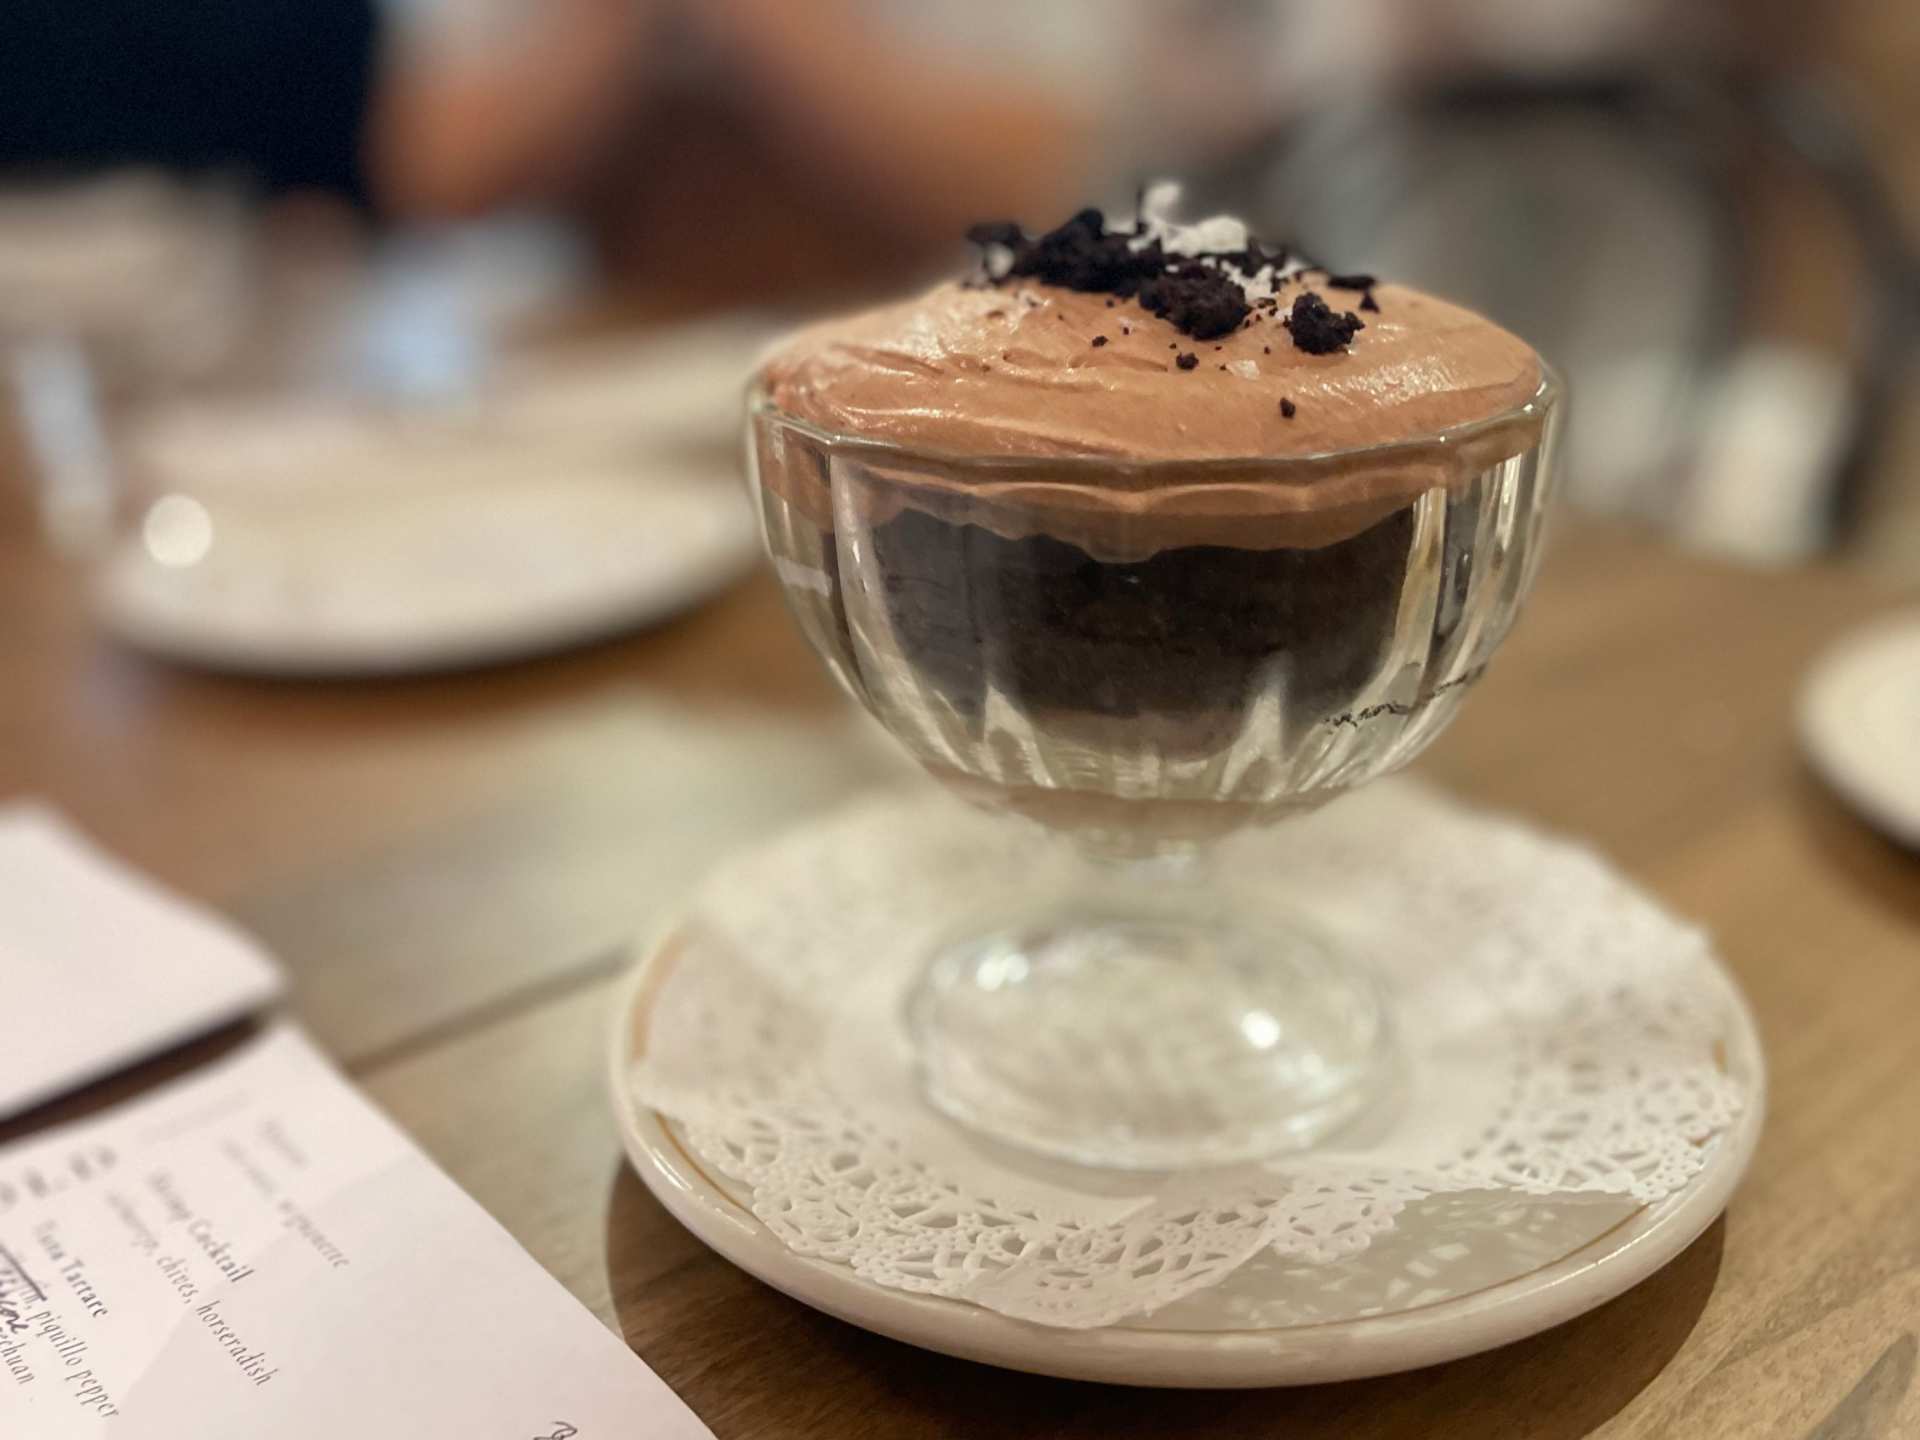 Best restaurants Toronto | A chocolate dessert at The Rosebud